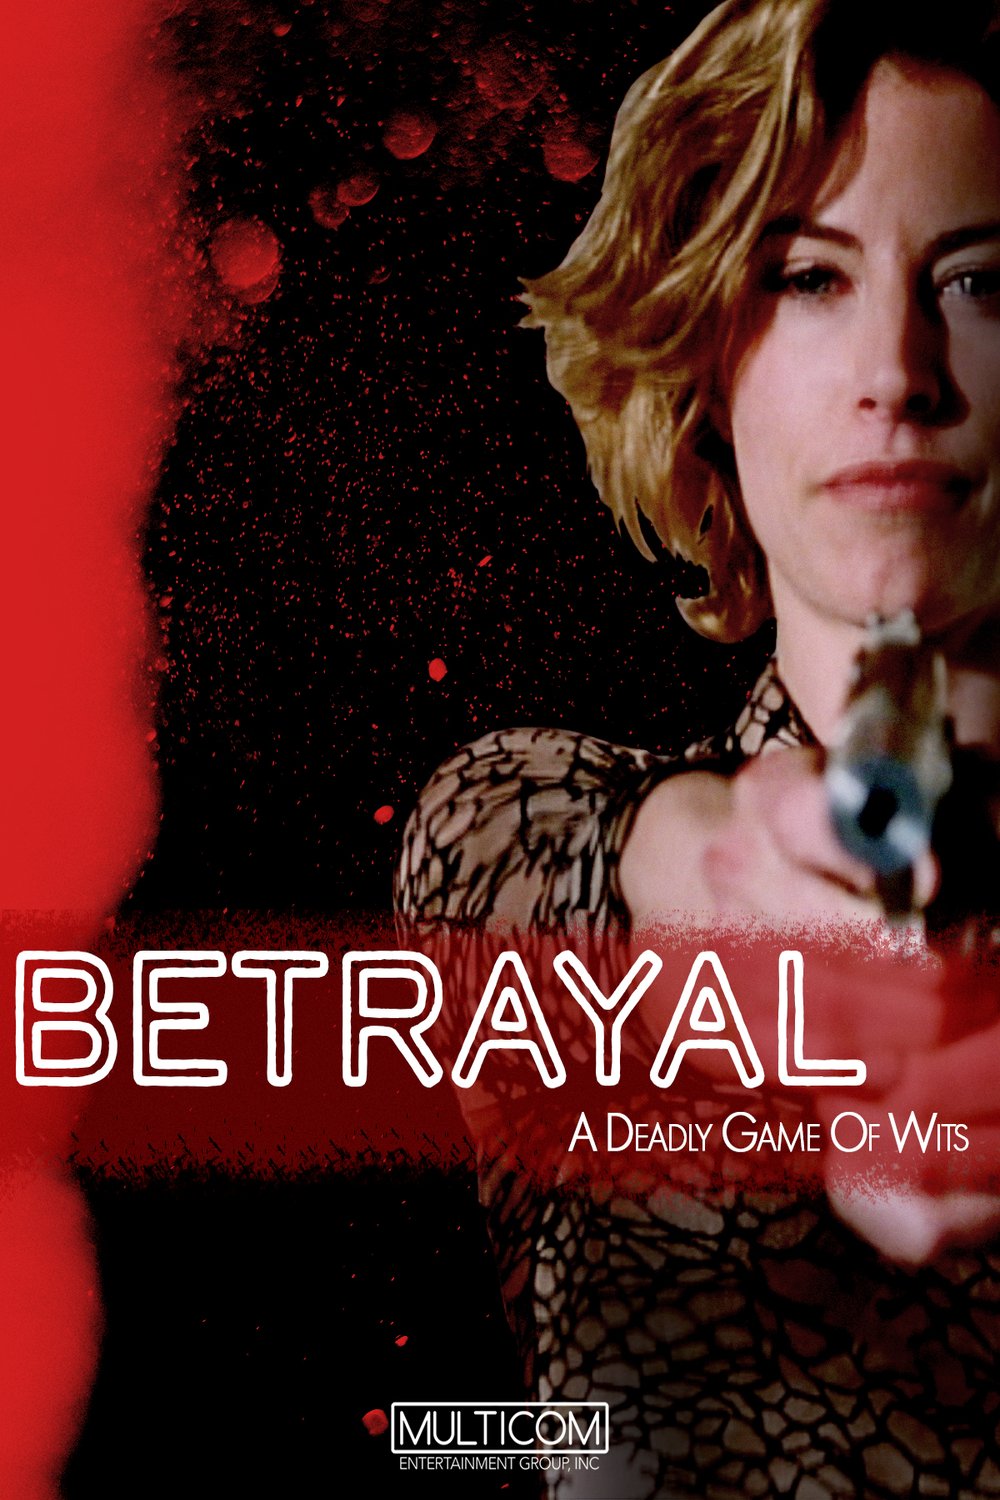 L'affiche du film Betrayal